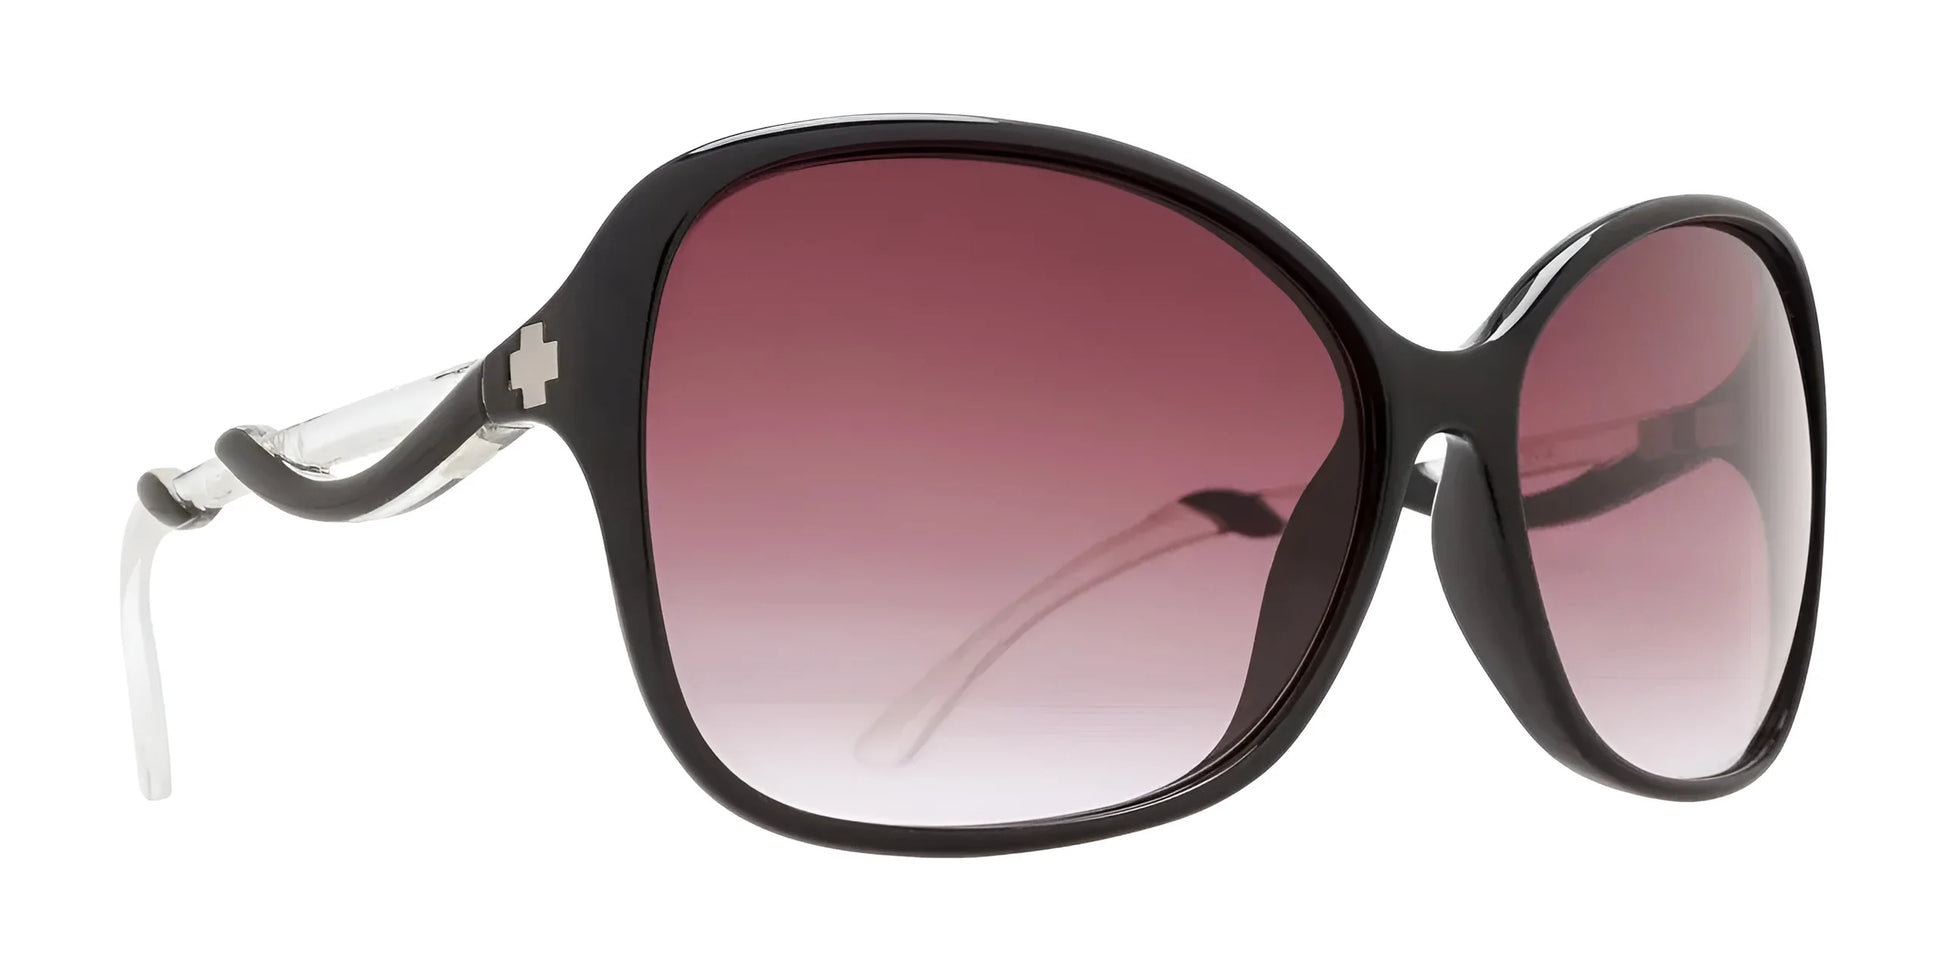 SPY FIONA Sunglasses Black With Clear / Happy Merlot Fade